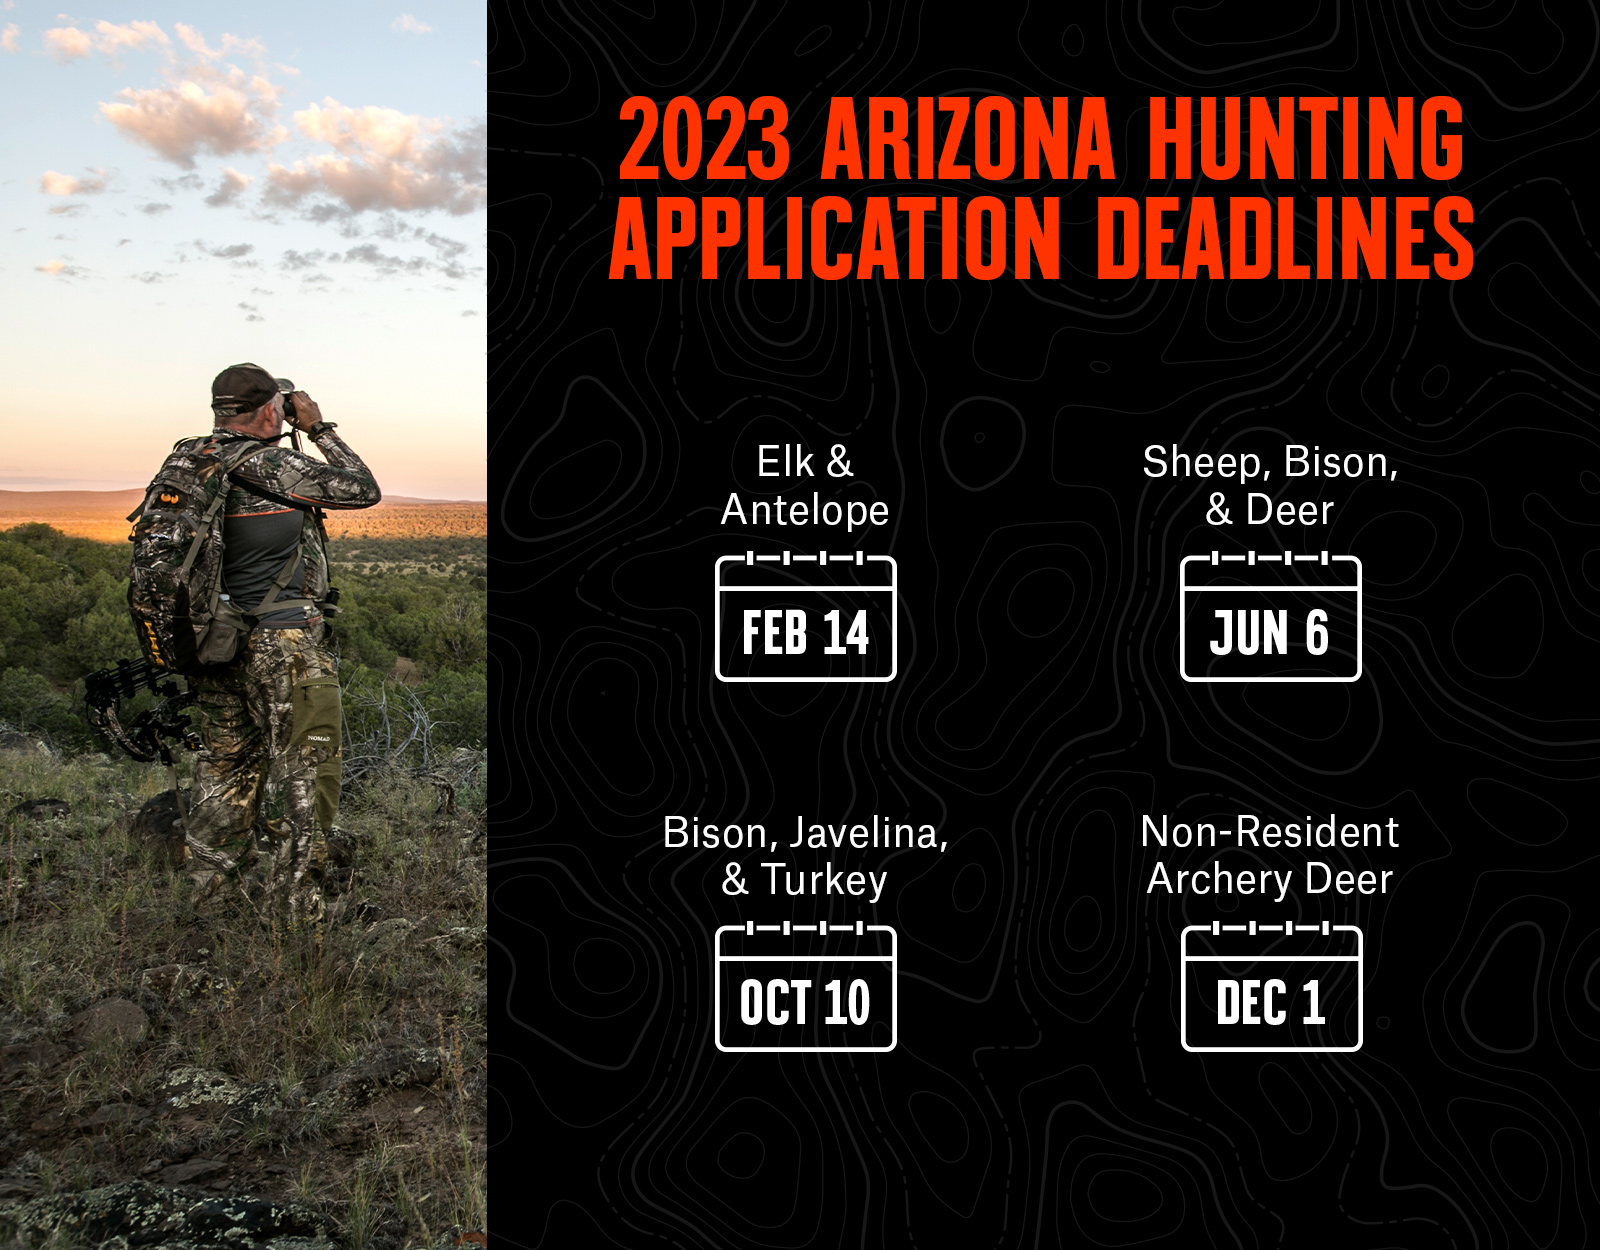 Arizona hunting application deadlines for 2023